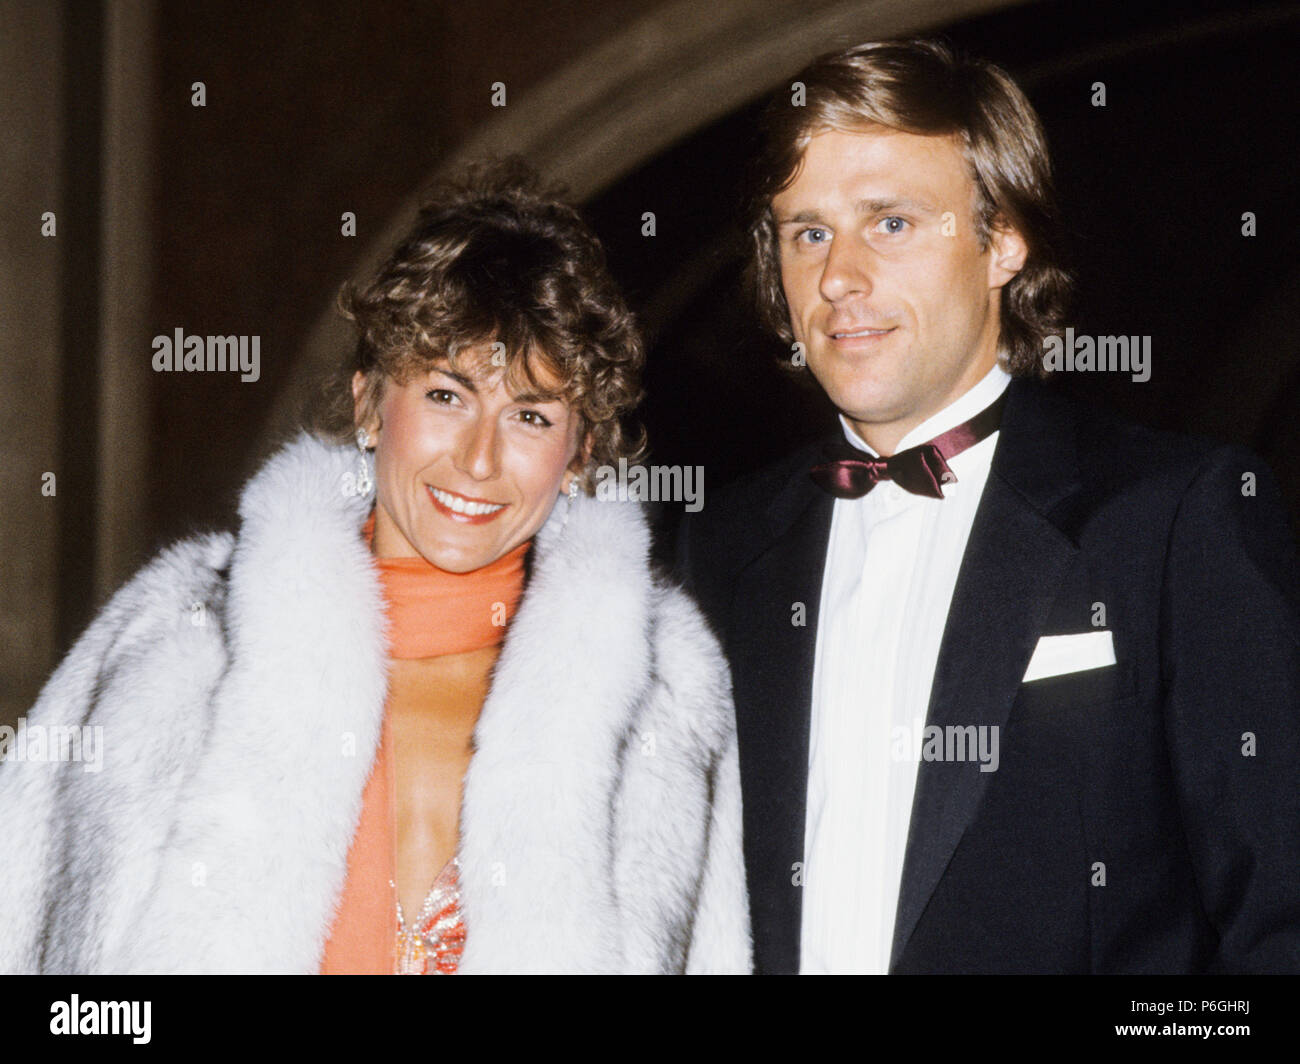 BJÖRN BORG Swedish tennis player with wife Mariana Simionescu 1983 Stock  Photo - Alamy